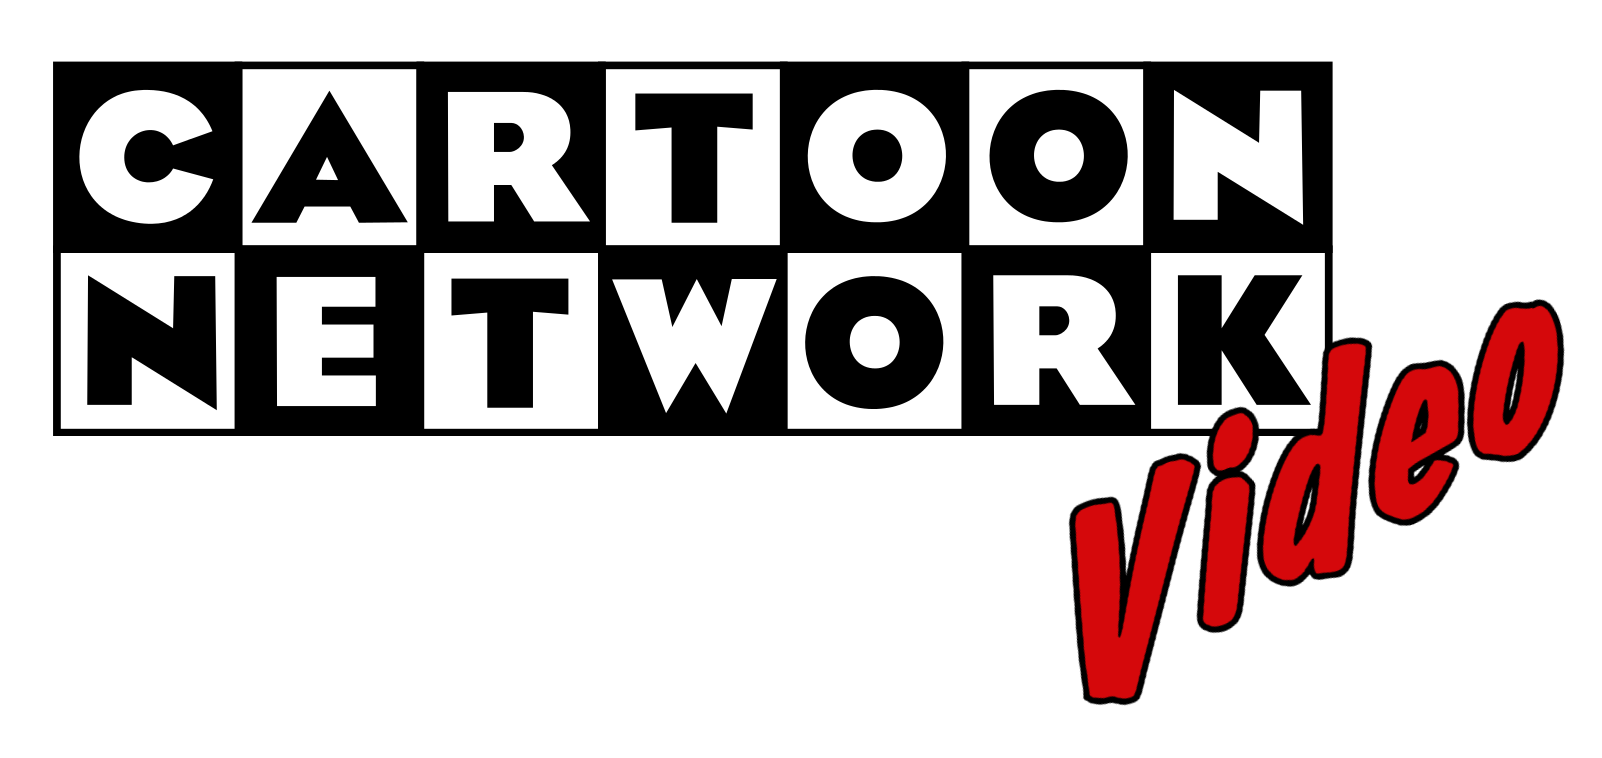 Cartoon Network Video logo 1996 Version 2 by FoxBoxNostalgic101 on  DeviantArt